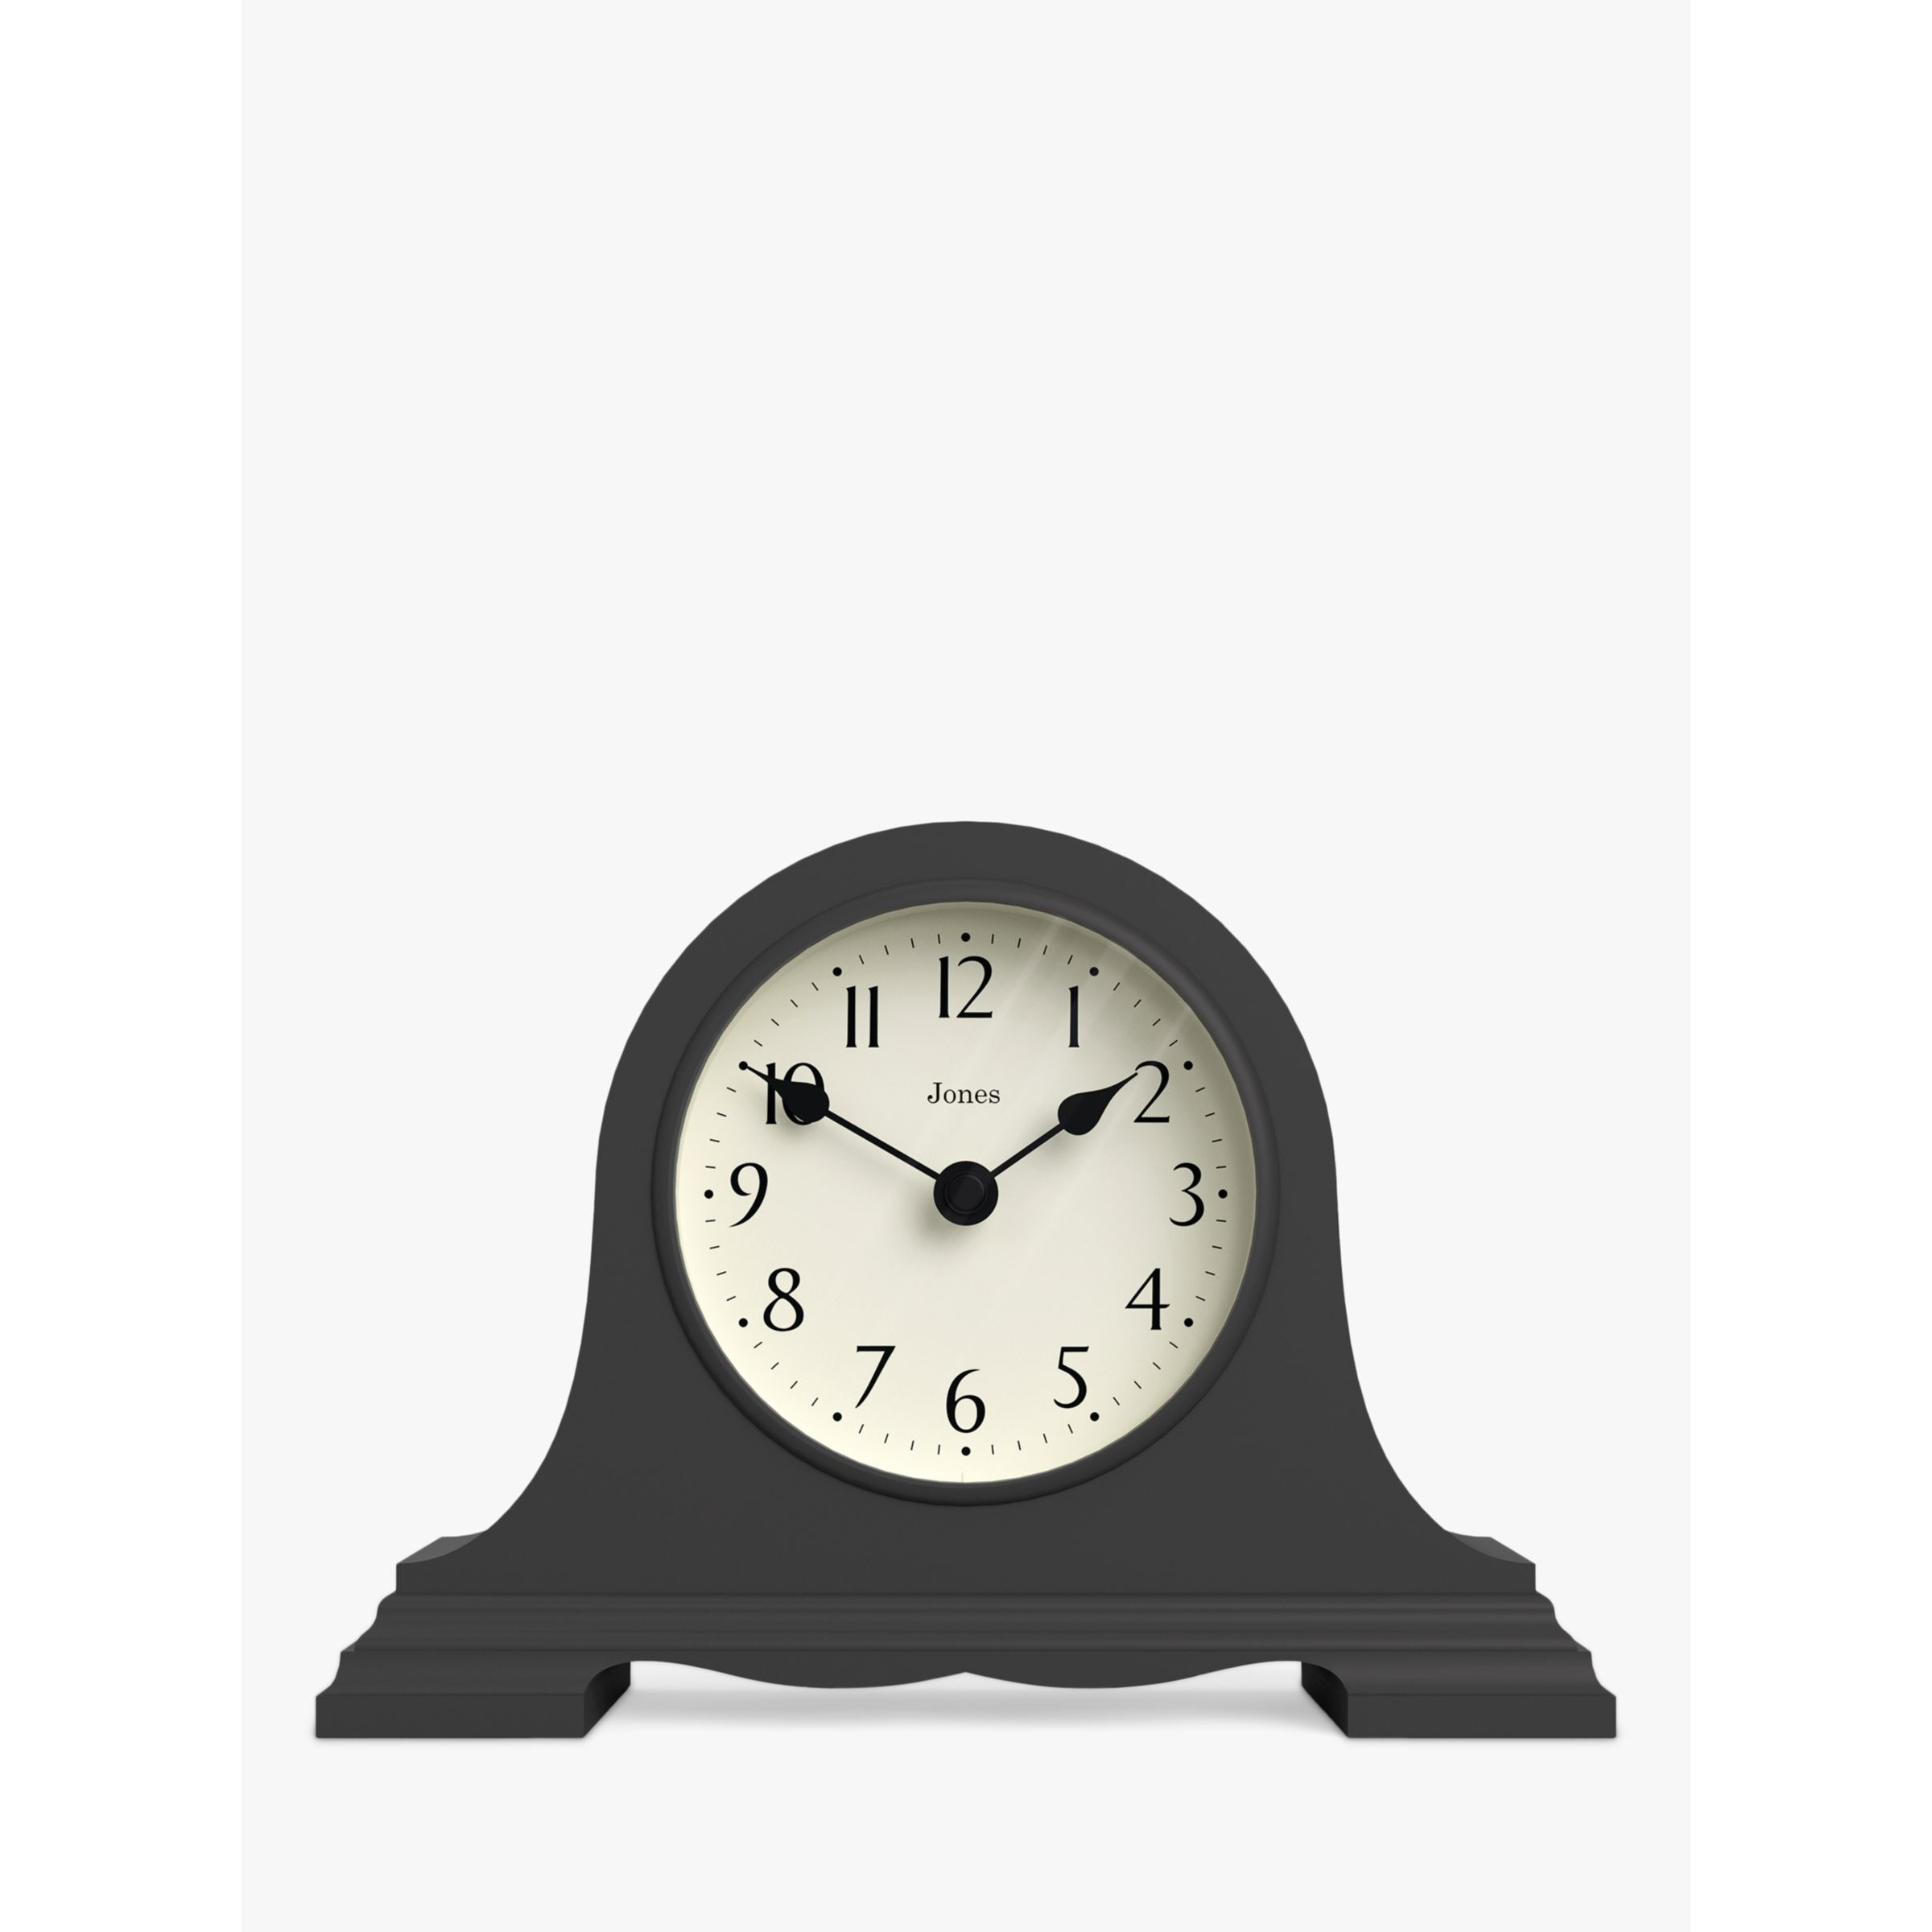 Jones Clocks Speakeasy Analogue Mantel Clock, Blizzard Grey - image 1